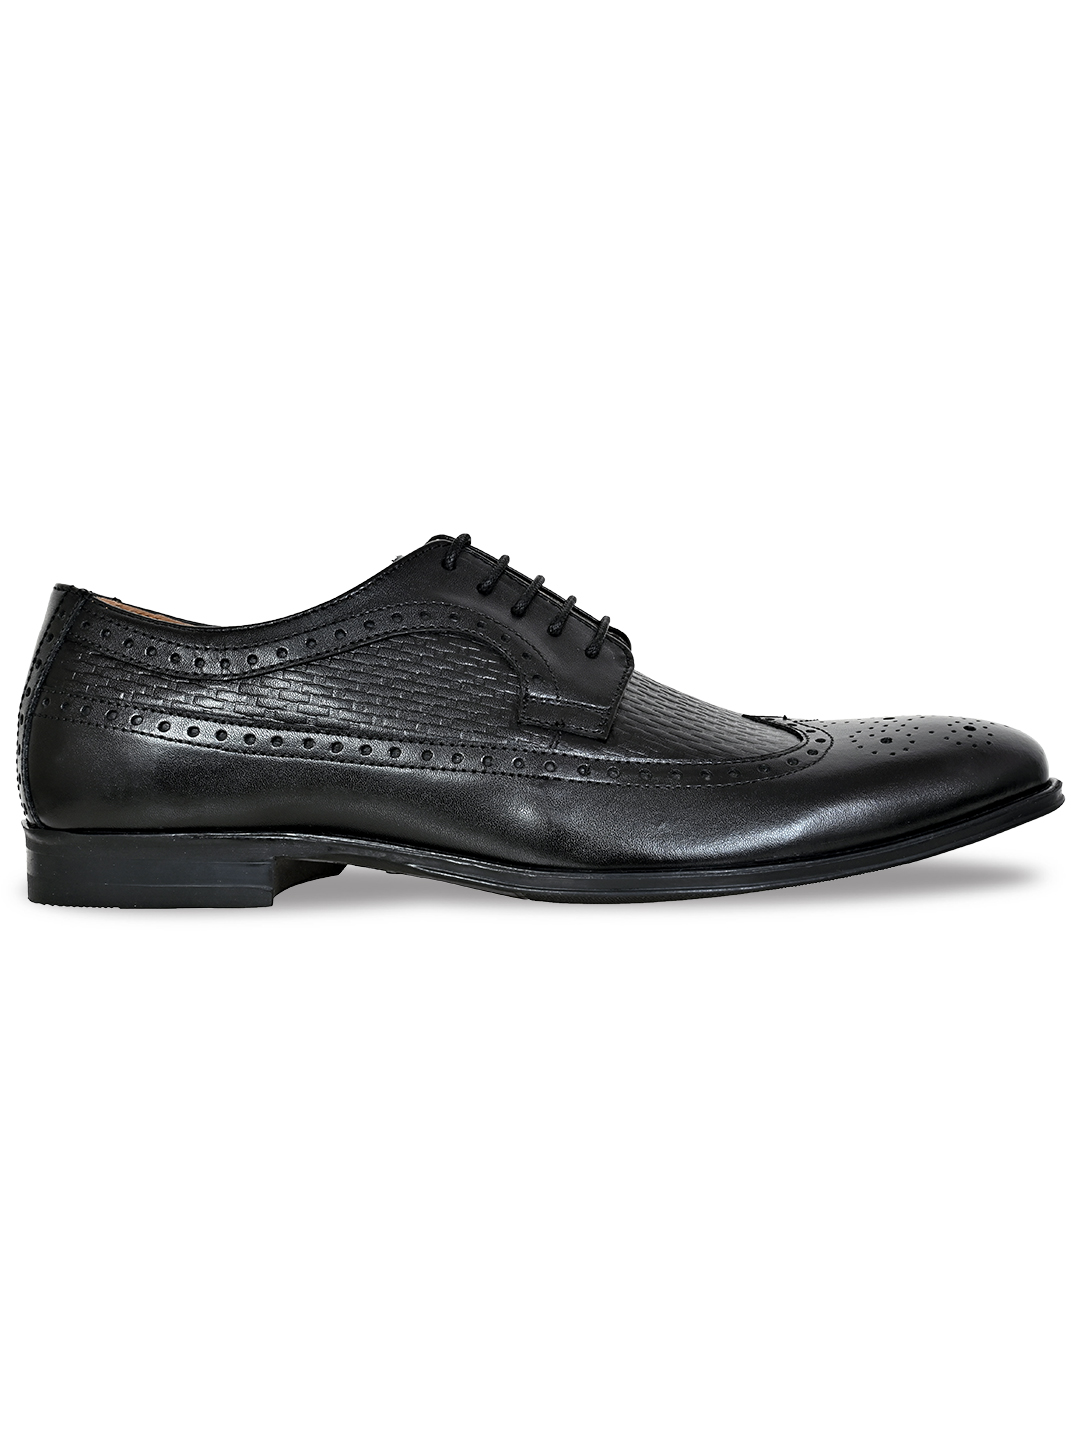 Allen Cooper Leather Formal Shoes For men - Allen Cooper | Most ...